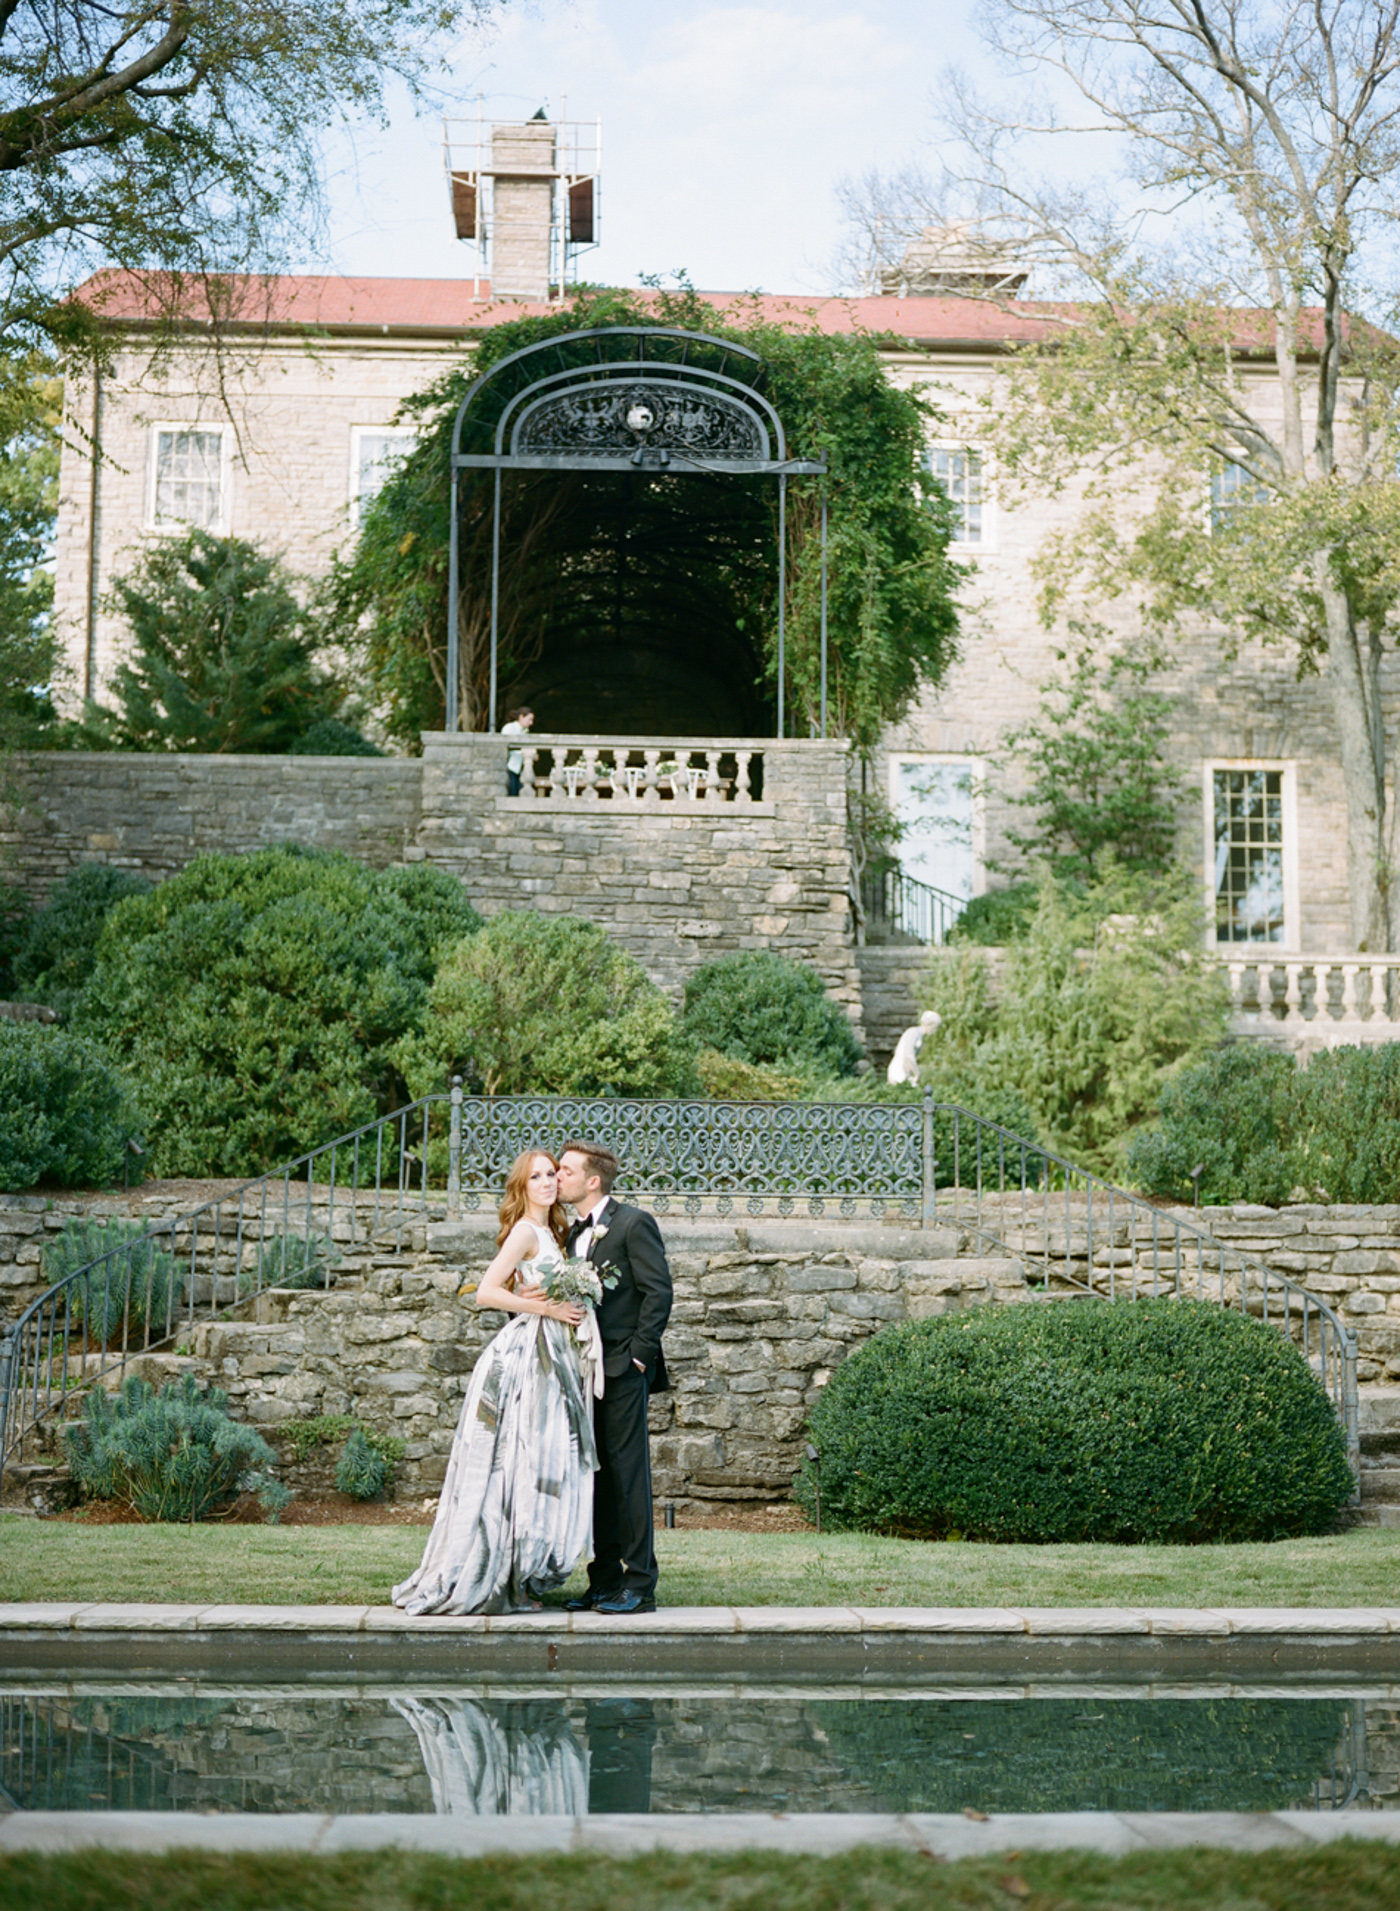 Romantic Nashville wedding setting,
Koby Brown Photography,
Nashville Photographer,
Rachel and Johnny